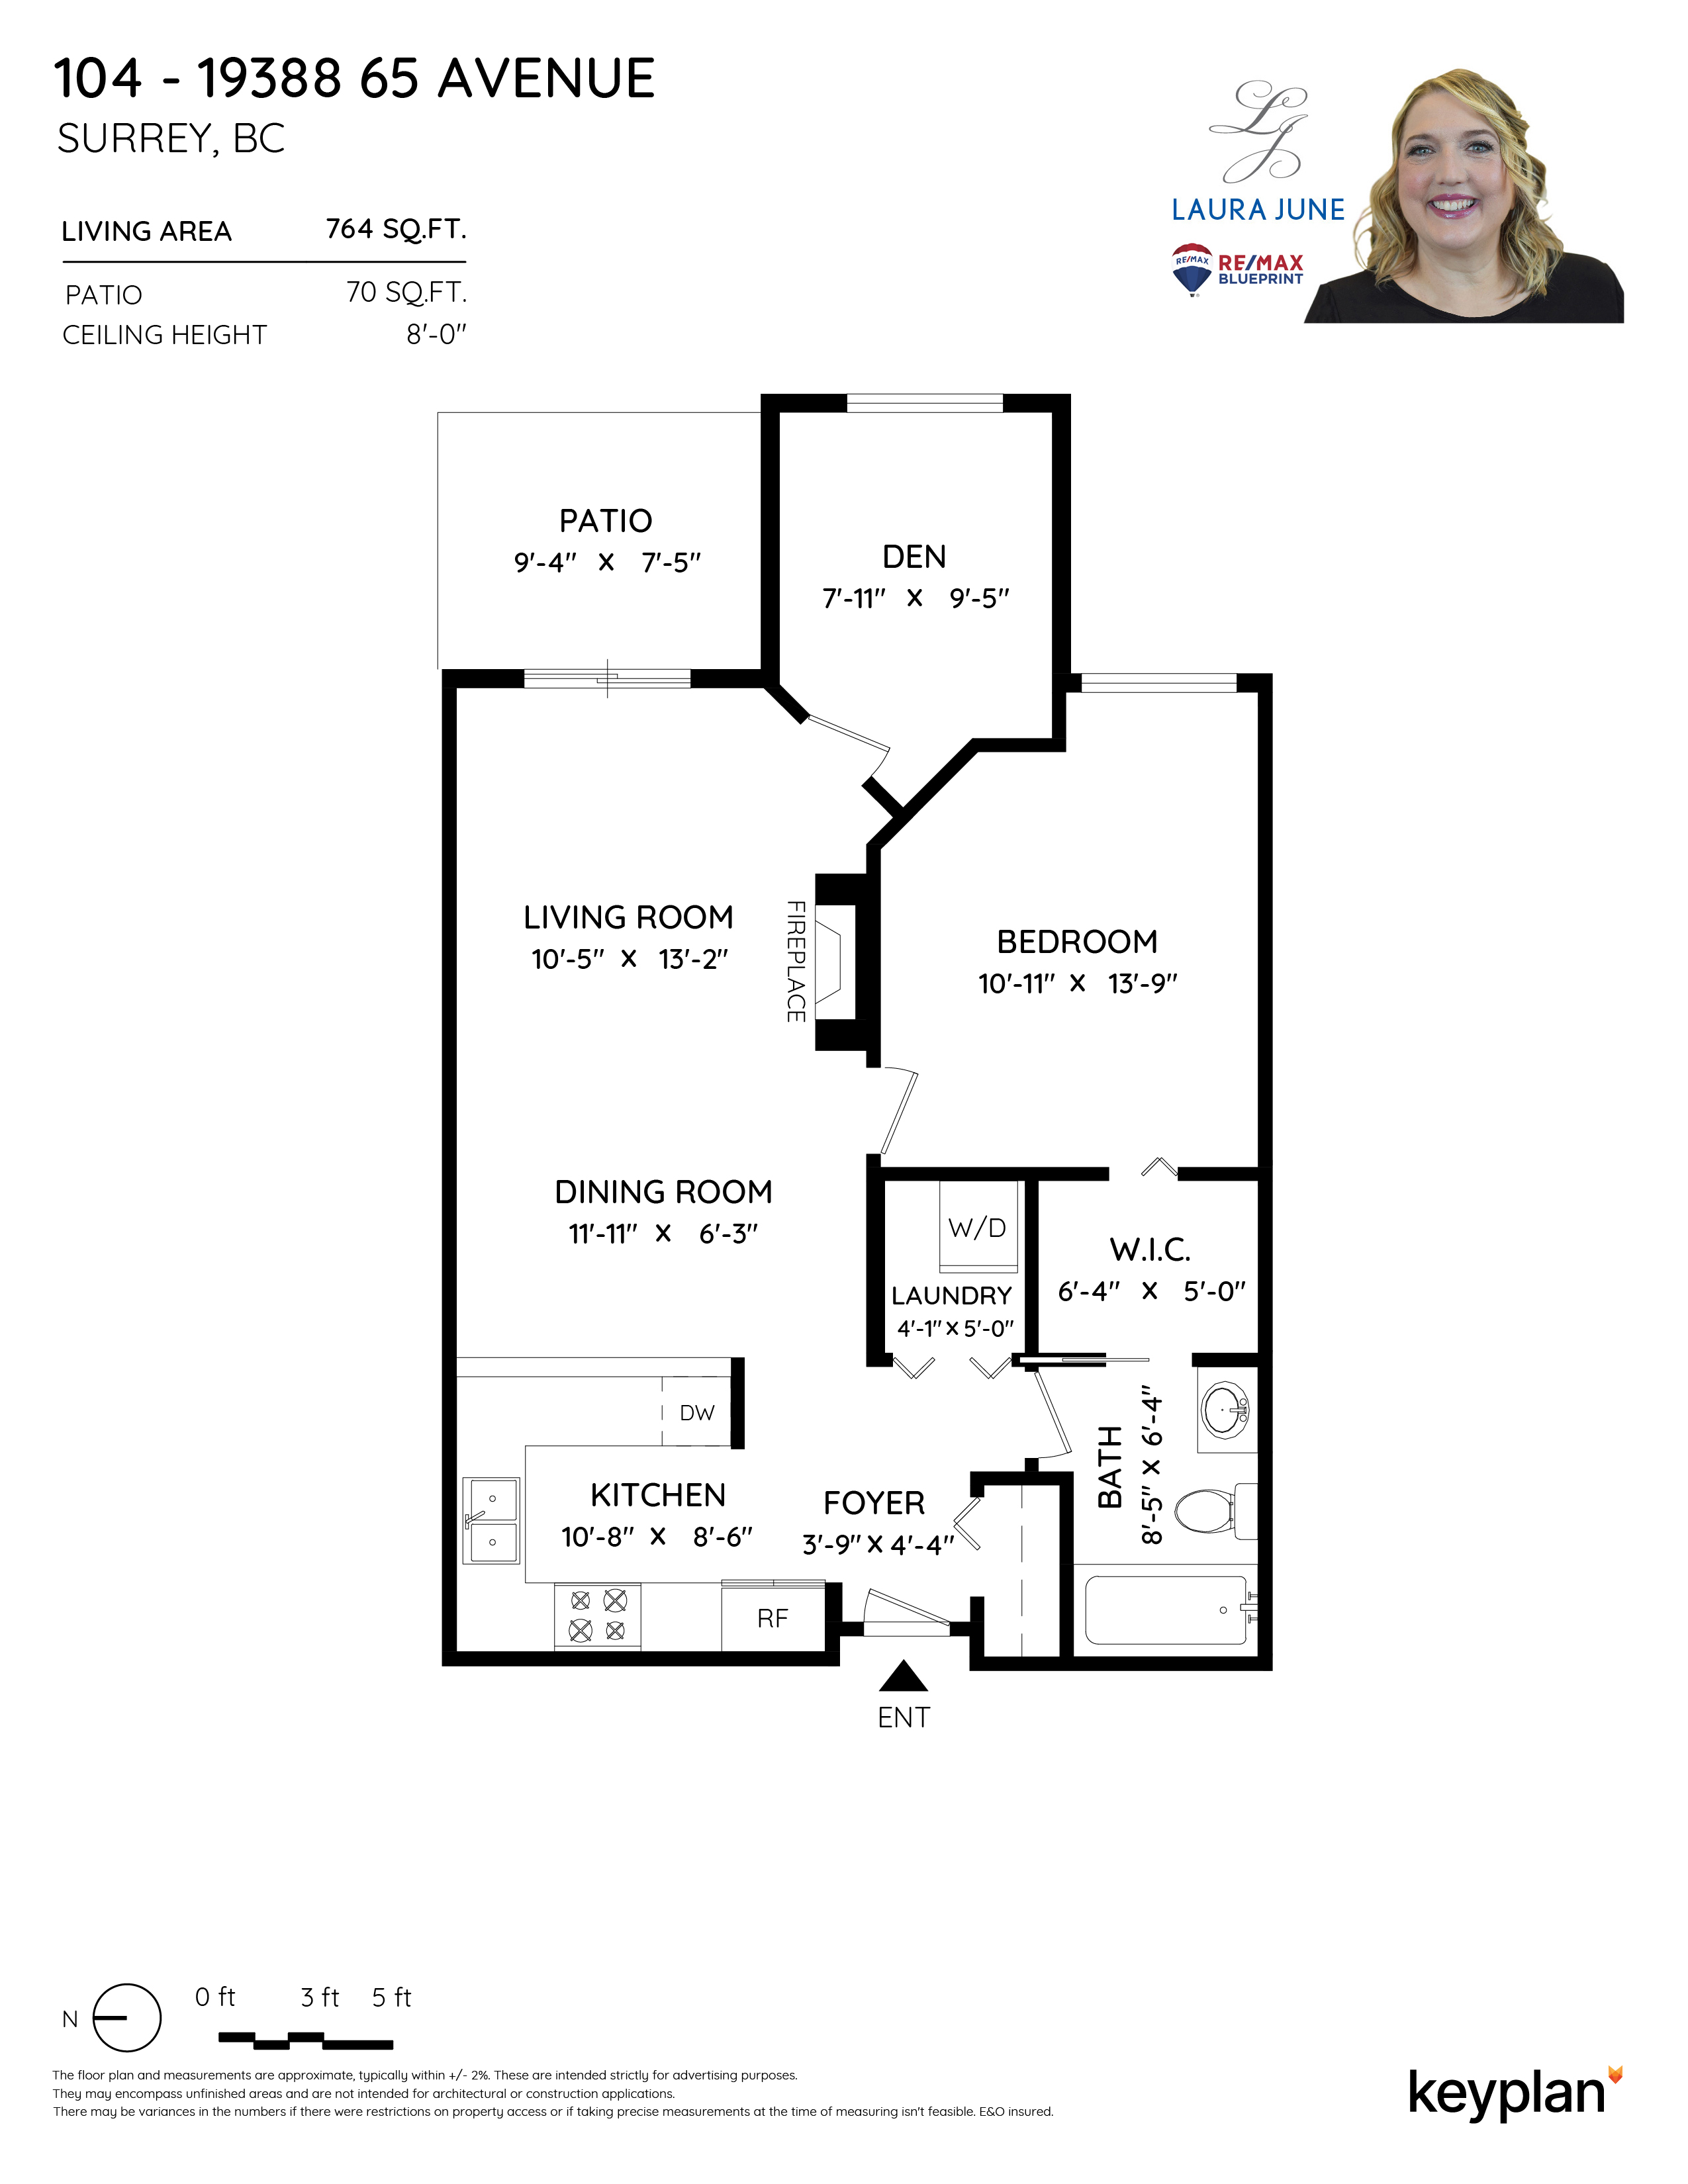 Laura June - Unit 104 - 19388 65 Avenue, Surrey, BC, Canada | Floor Plan 1